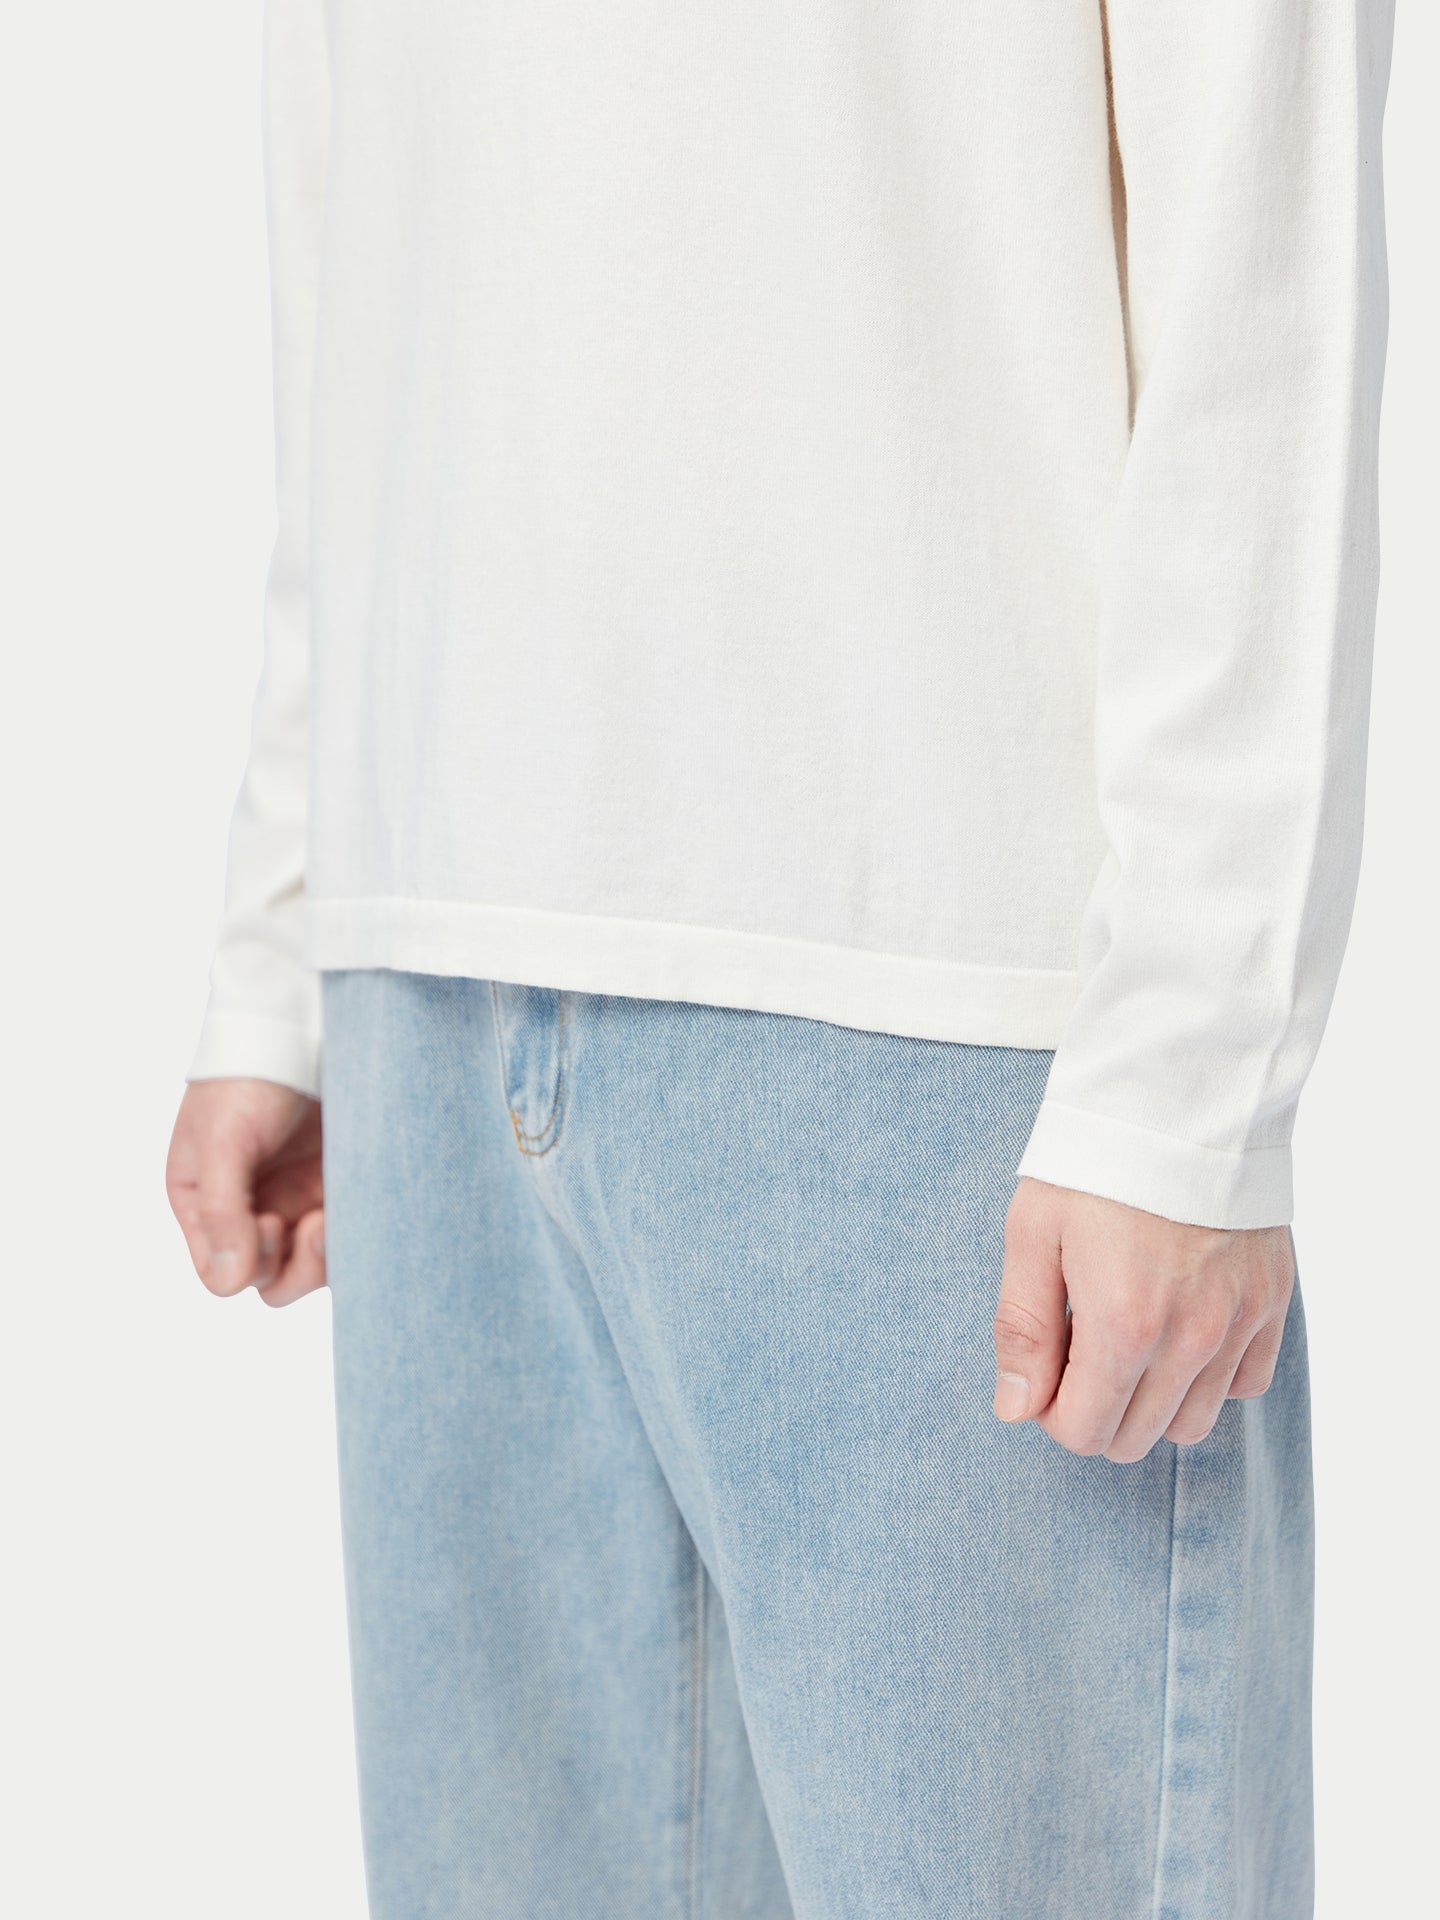 Men's Crewneck Cotton Silk Cashmere Blend Sweater Whisper White - Gobi Cashmere